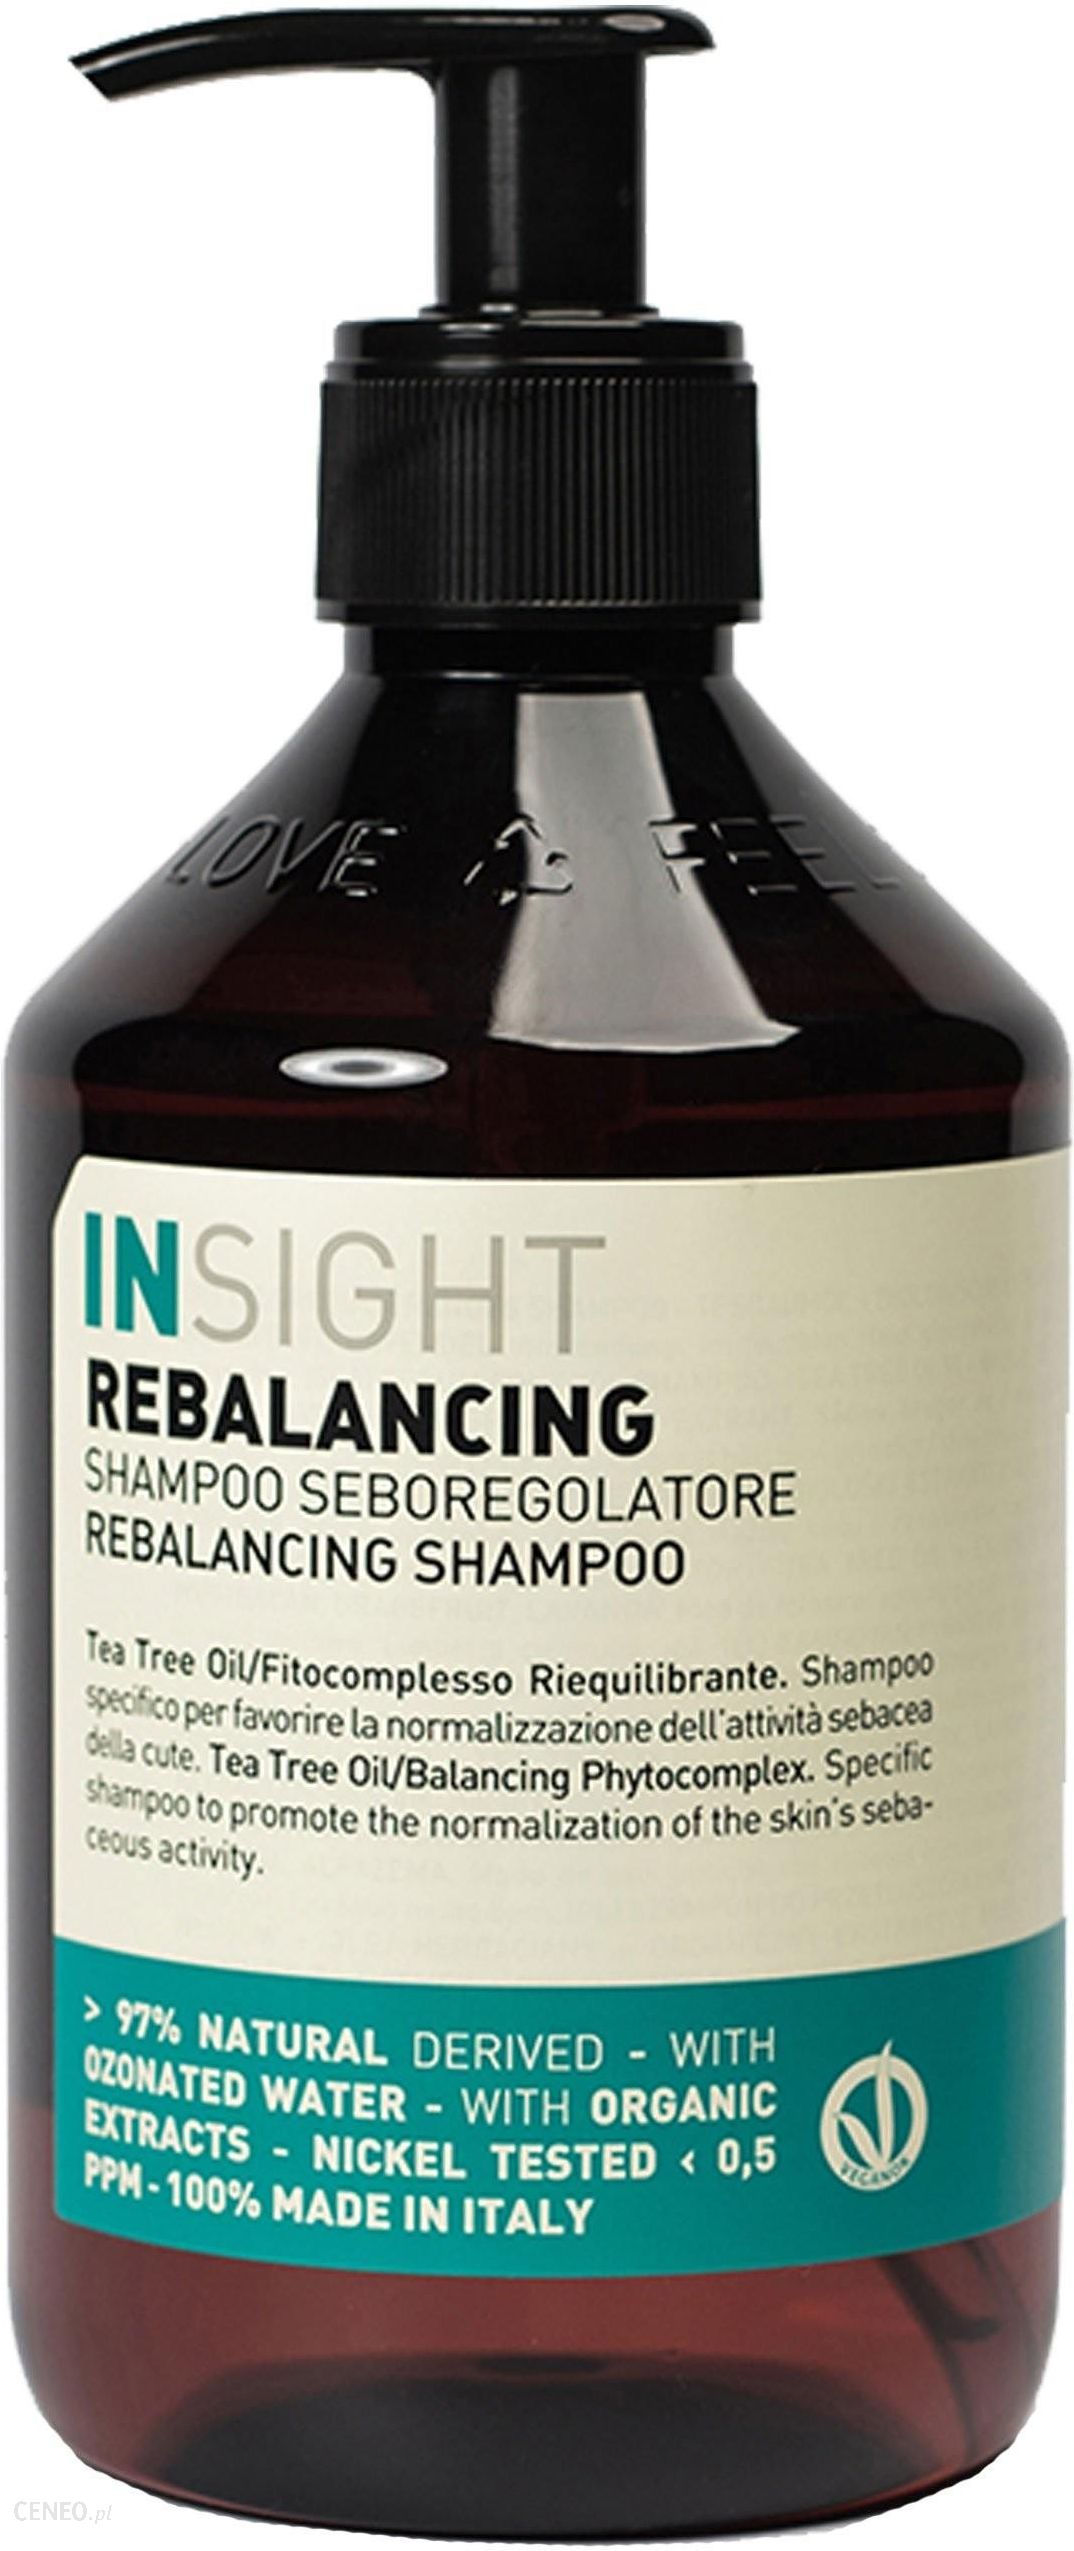 insight szampon rebalancing opinie